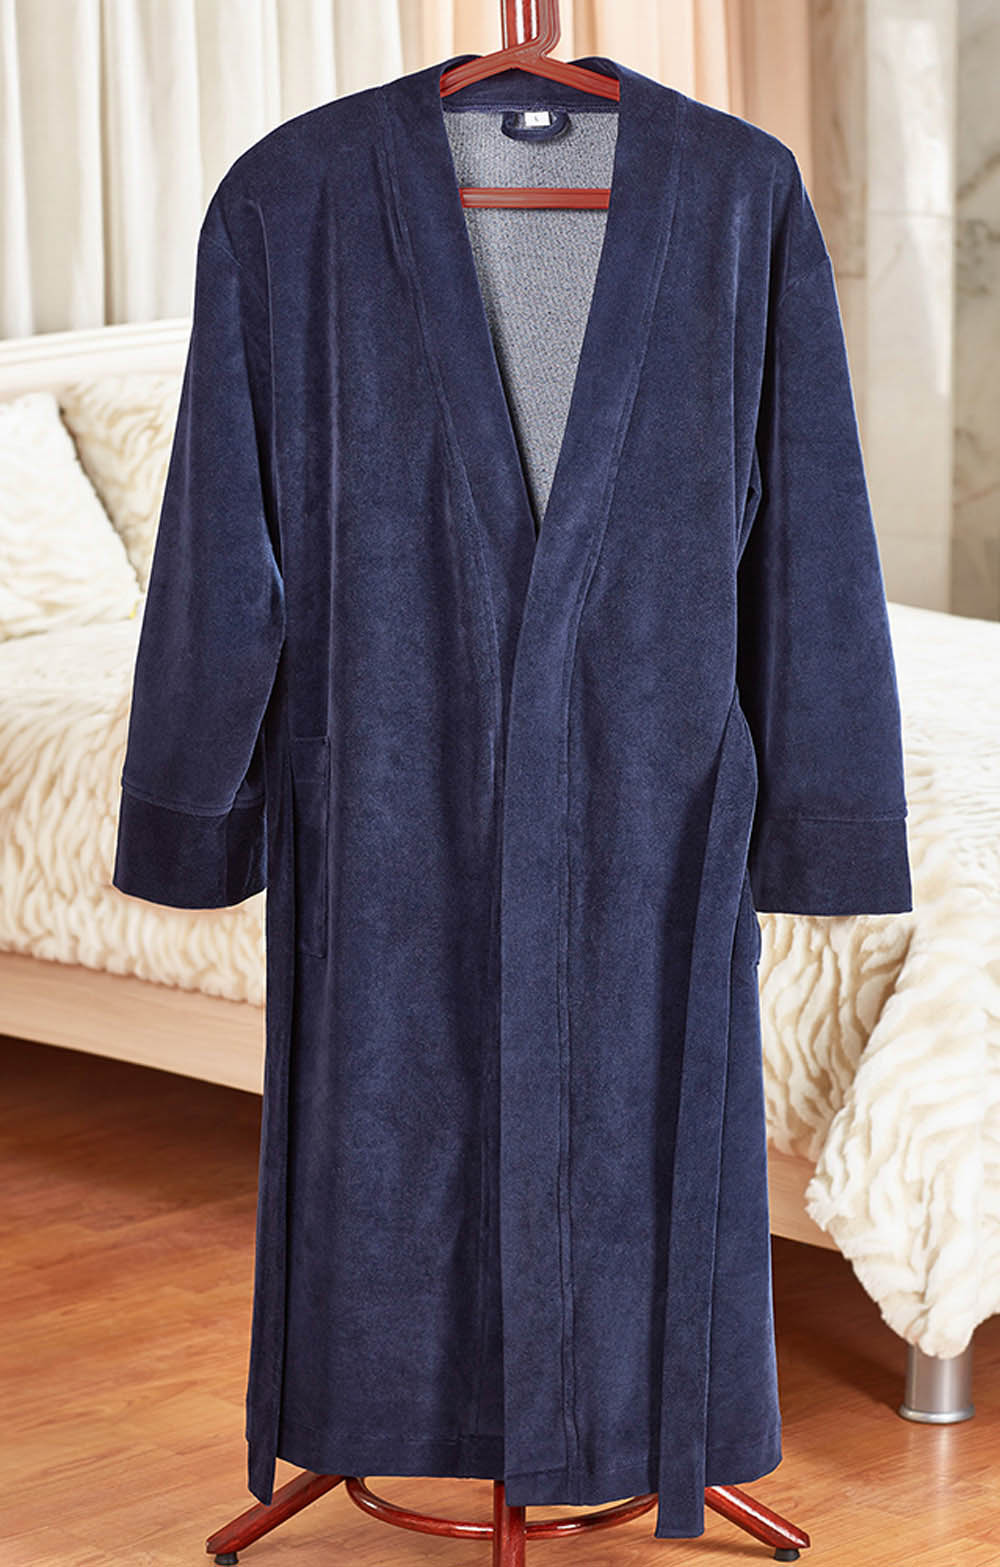 Банный халат Enrico цвет: темно-синий (M) Primavelle pve319728